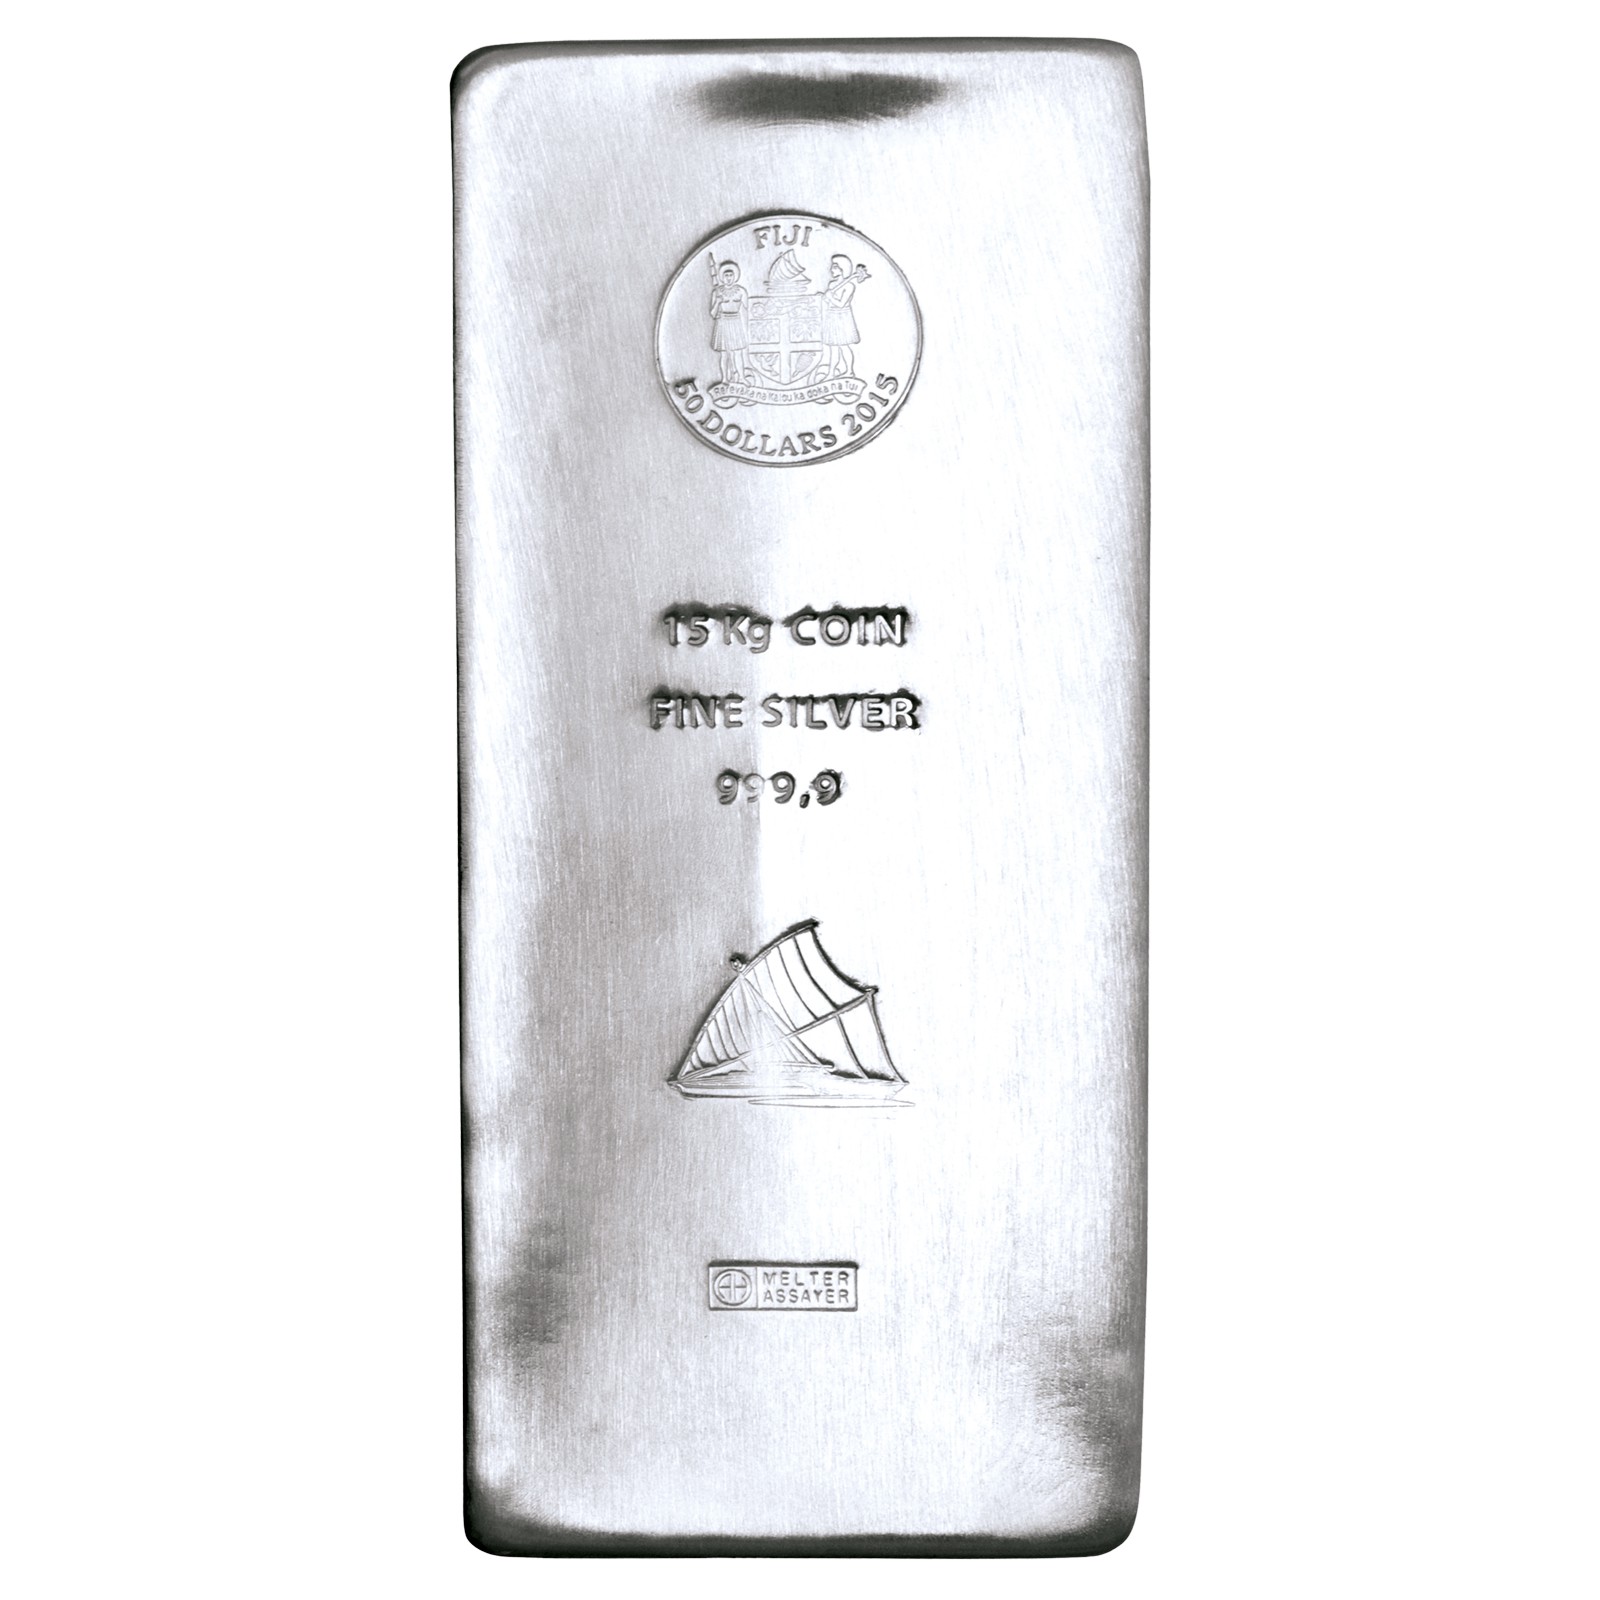 15 Kilogramm Silber Argor Heraeus Fiji, Niue oder Cook Islands-Silbermünze (Sonderprägung in Barrenform), Differenzbesteuert § 24 UStG